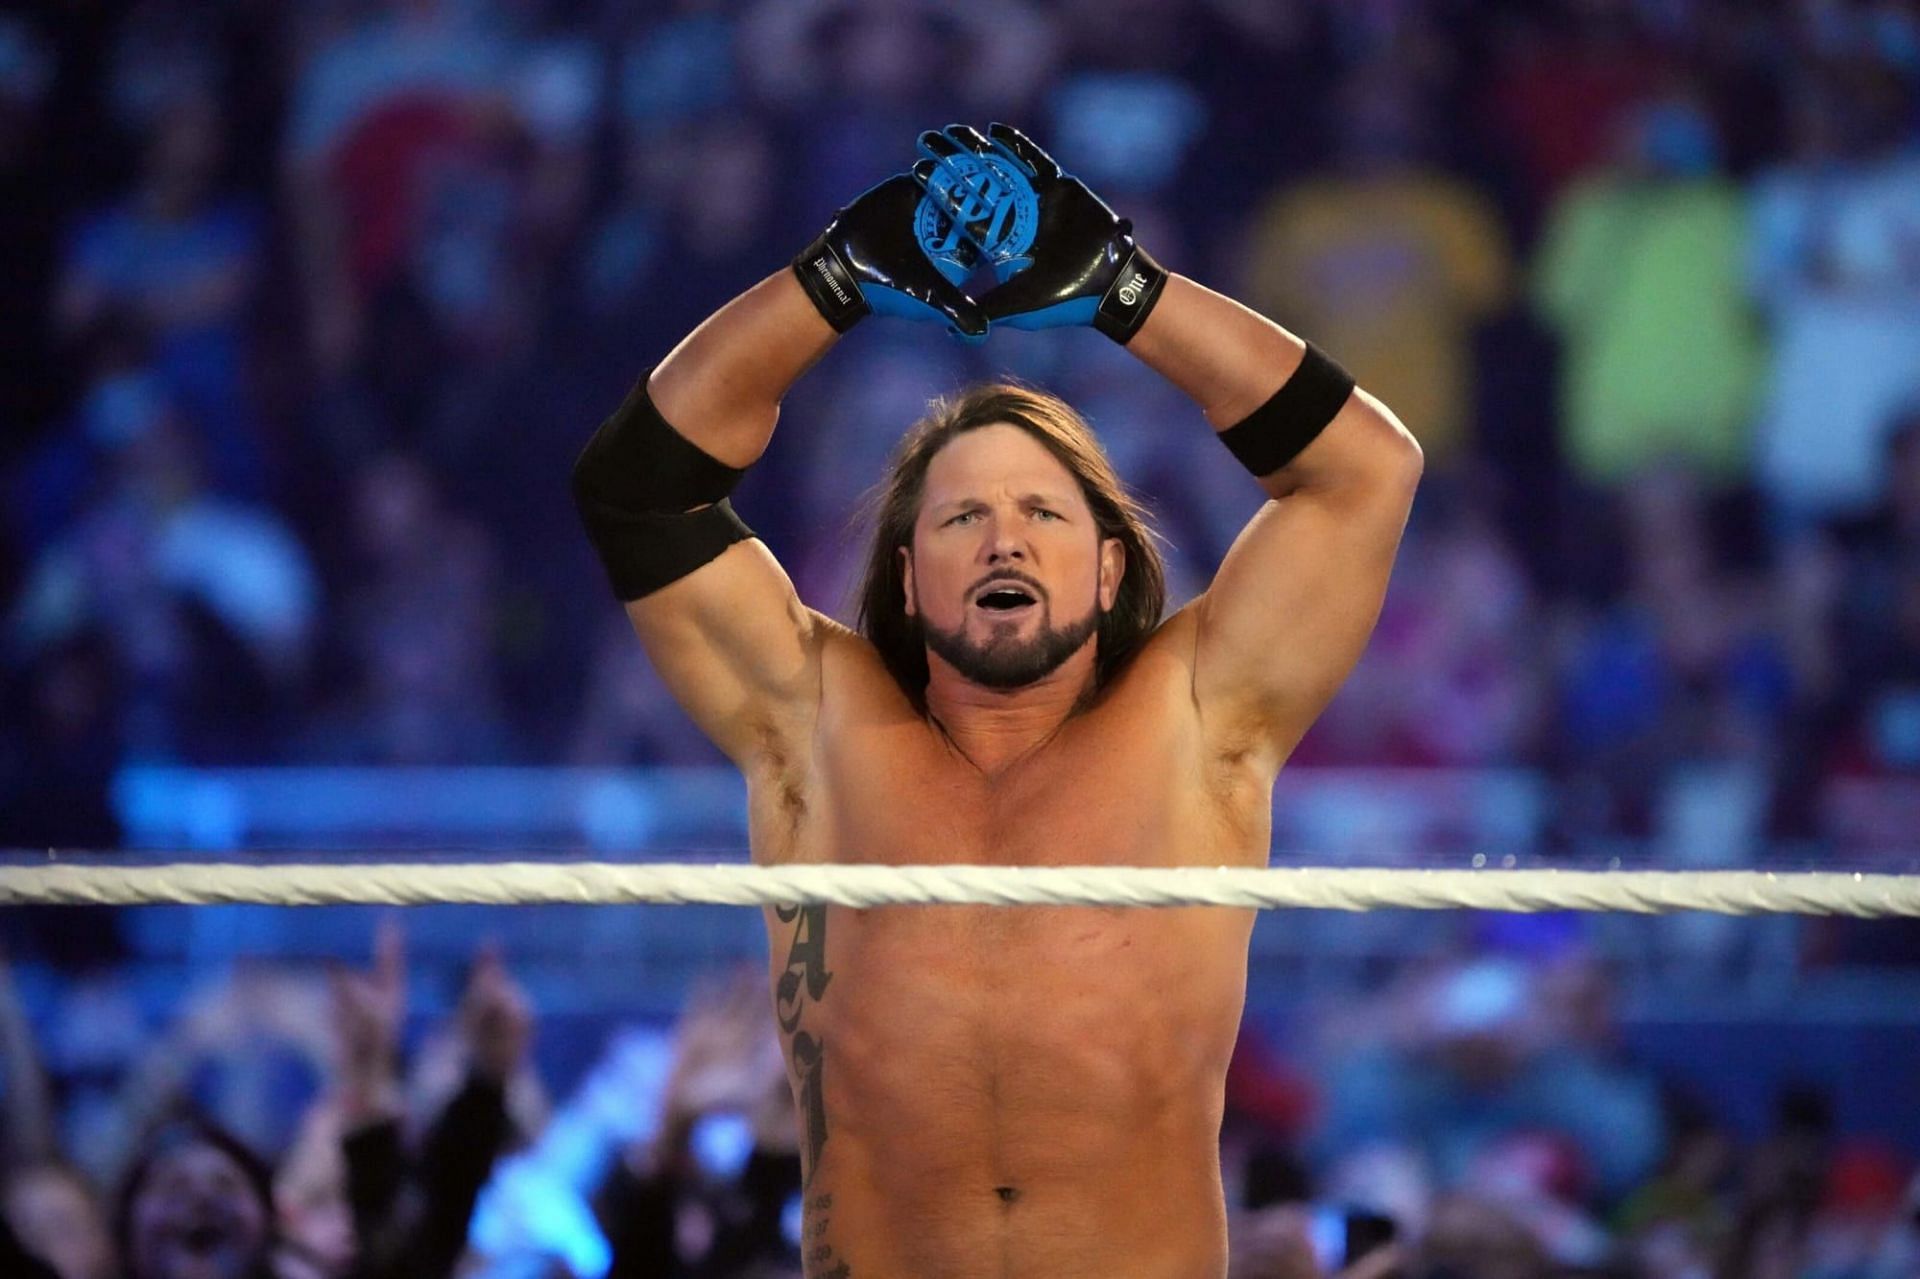 AJ Styles won the SmackDown side of the bracket.